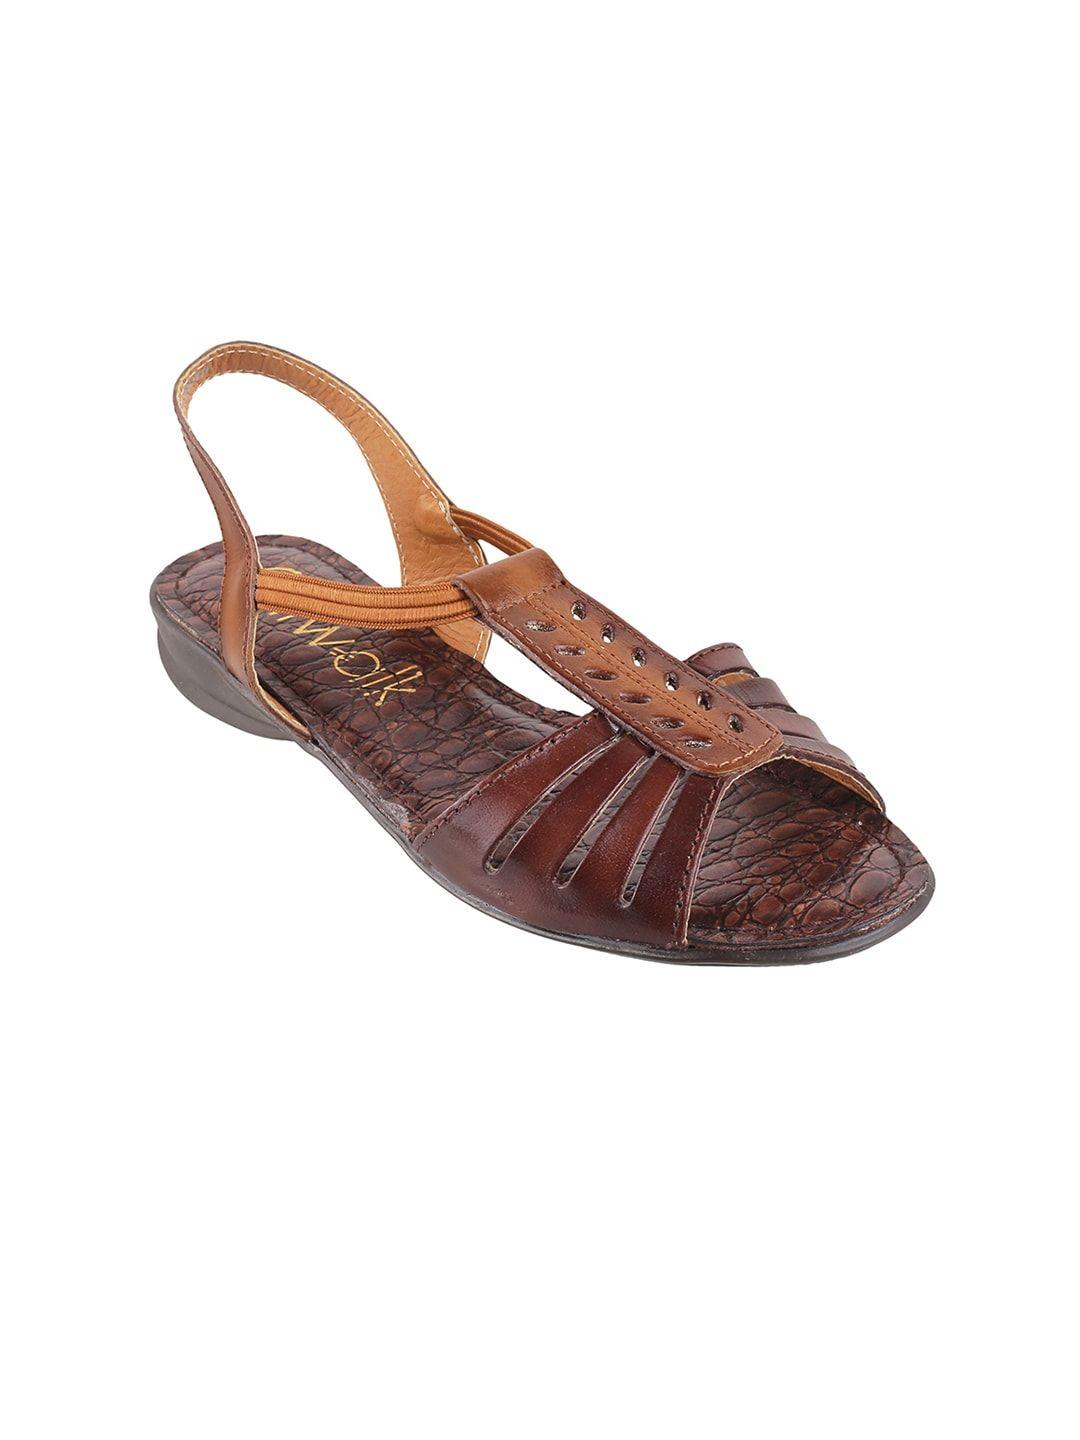 catwalk-women-brown-solid-leather-open-toe-flats